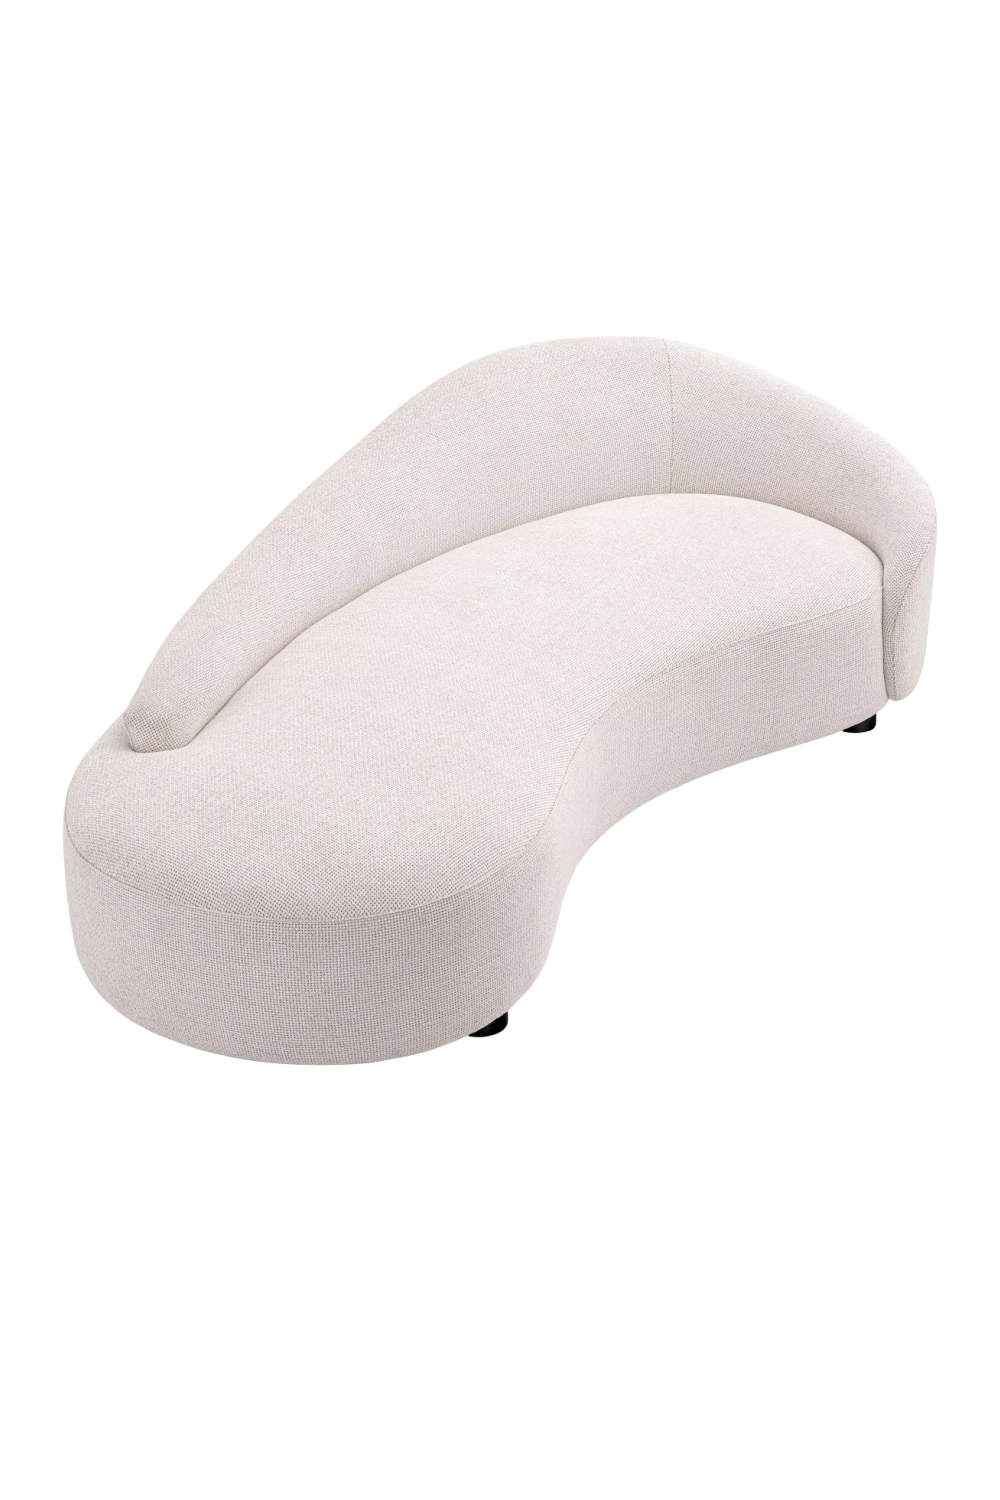 White Modern Curved Sofa | Eichholtz Rivolo | Oroa.com